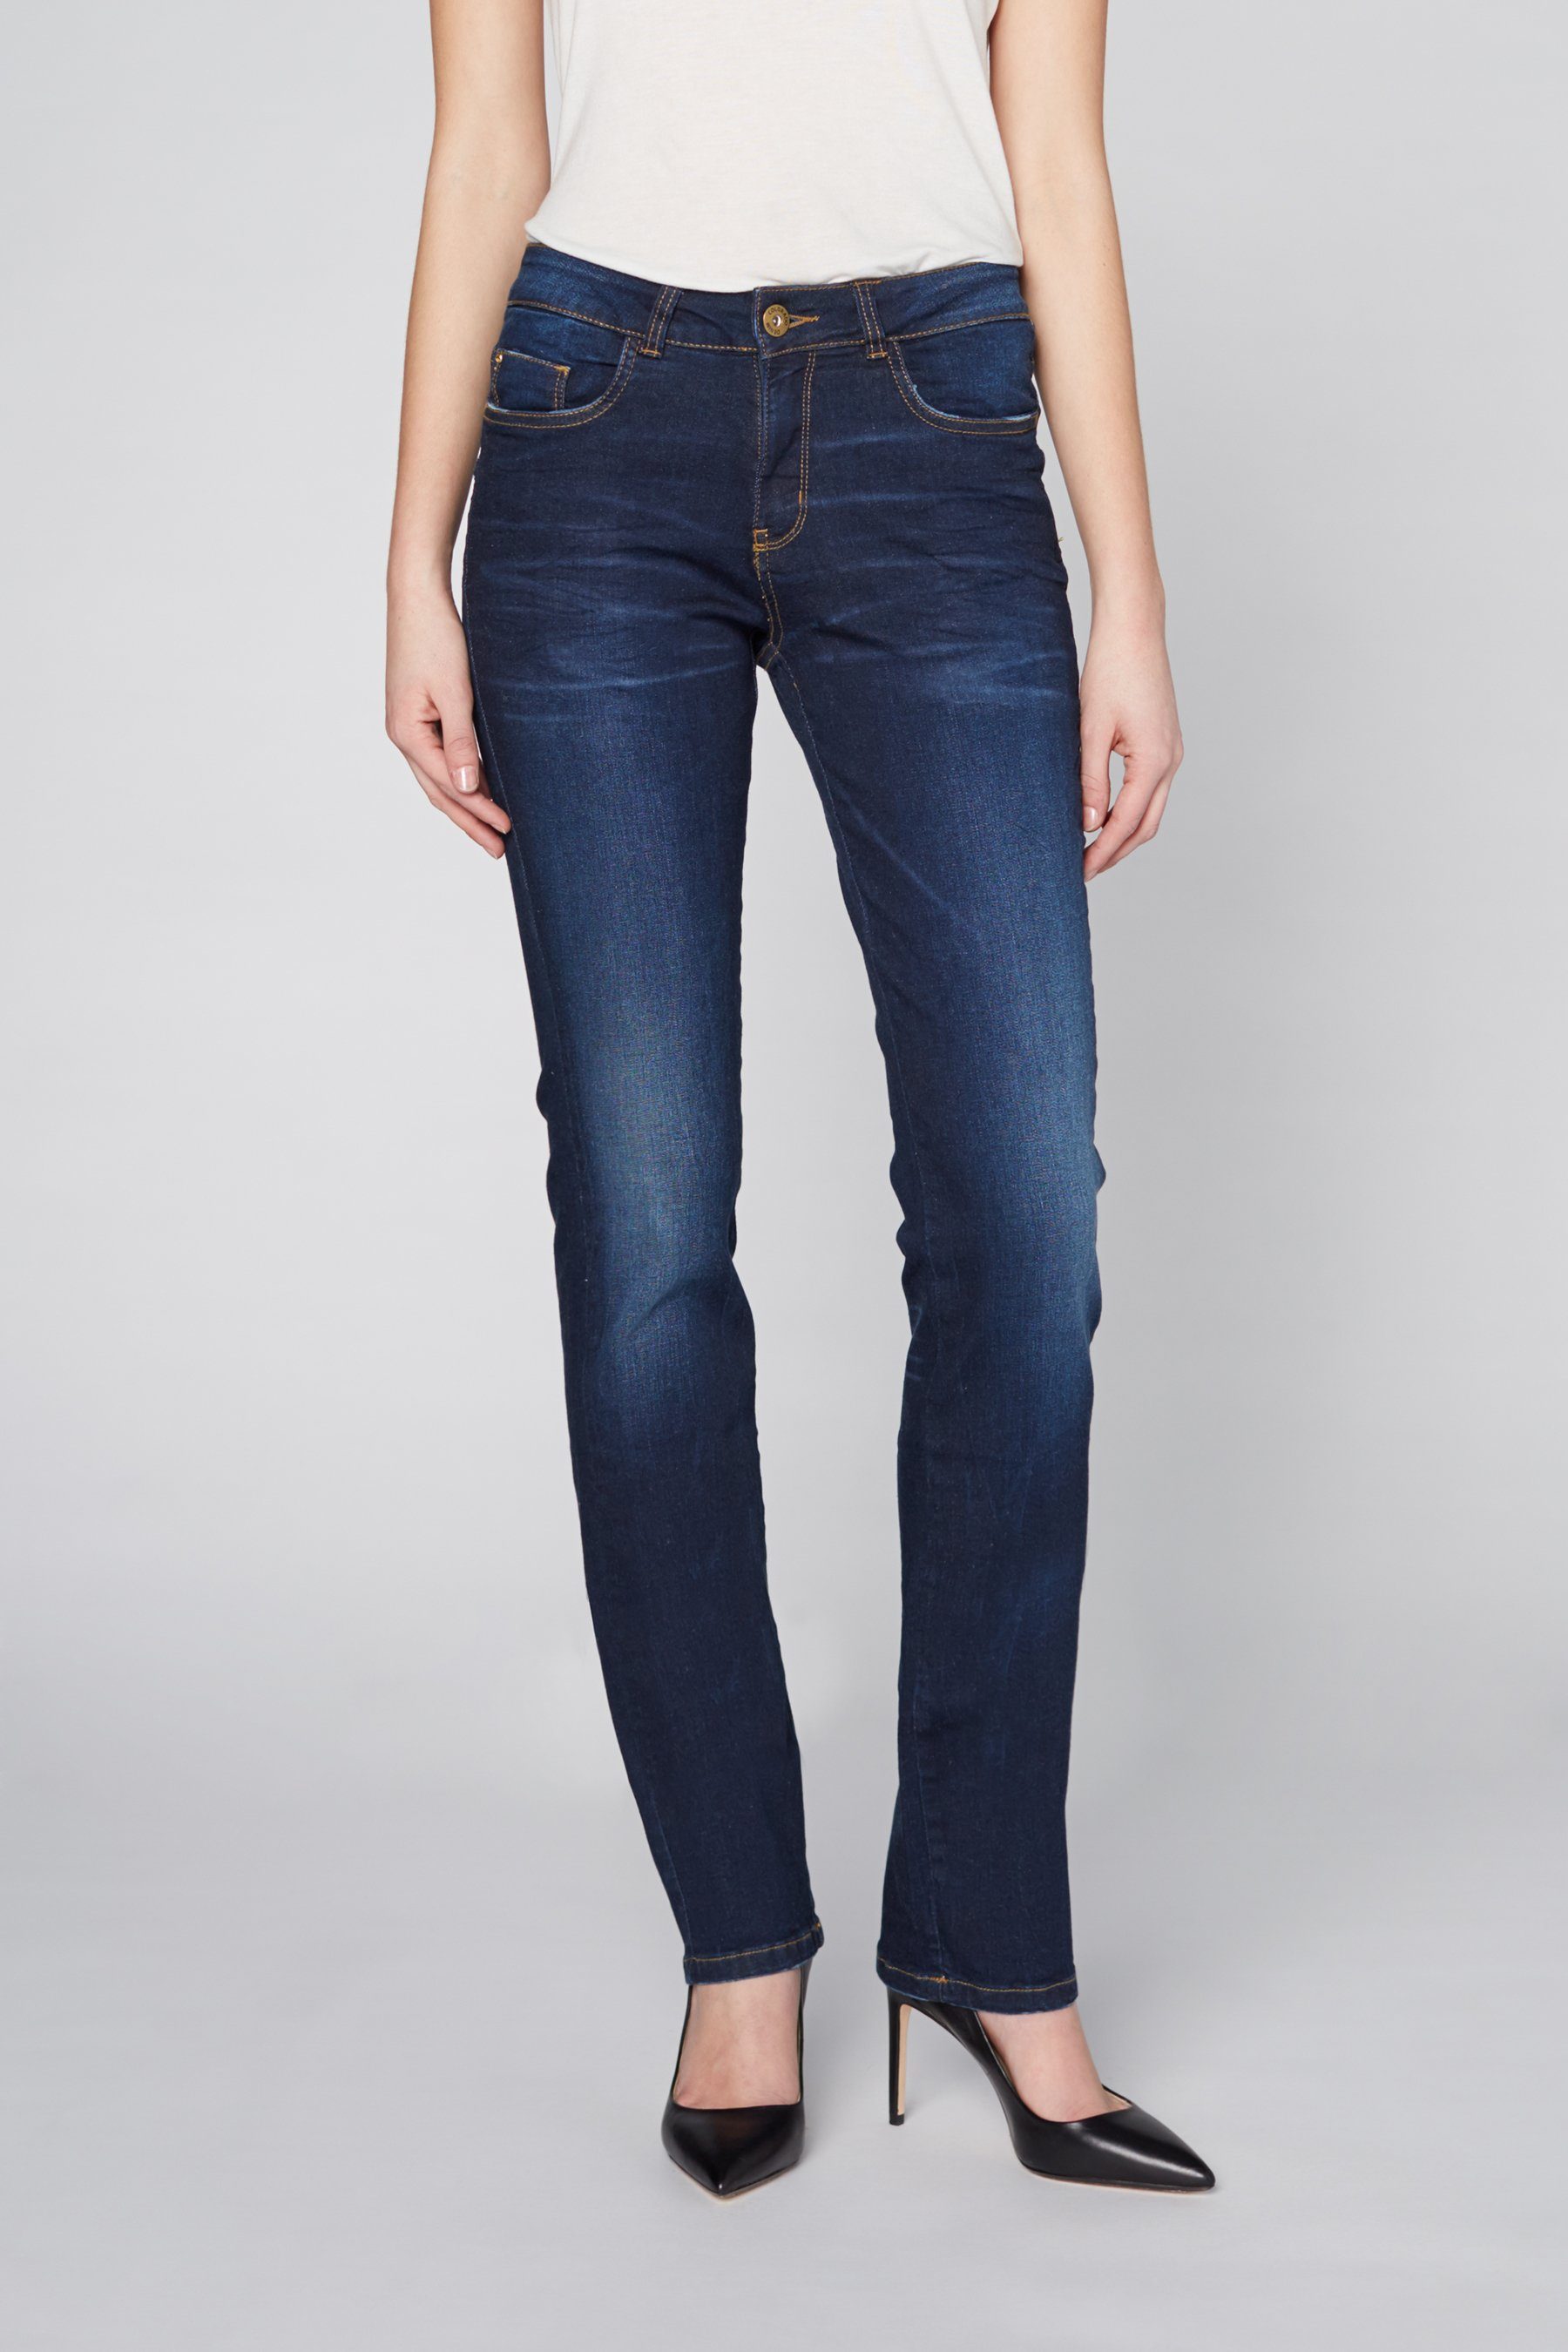 Otto - Colorado Denim NU 15% KORTING: COLORADO DENIM Jeans C959 LAYLA Dames Jeans